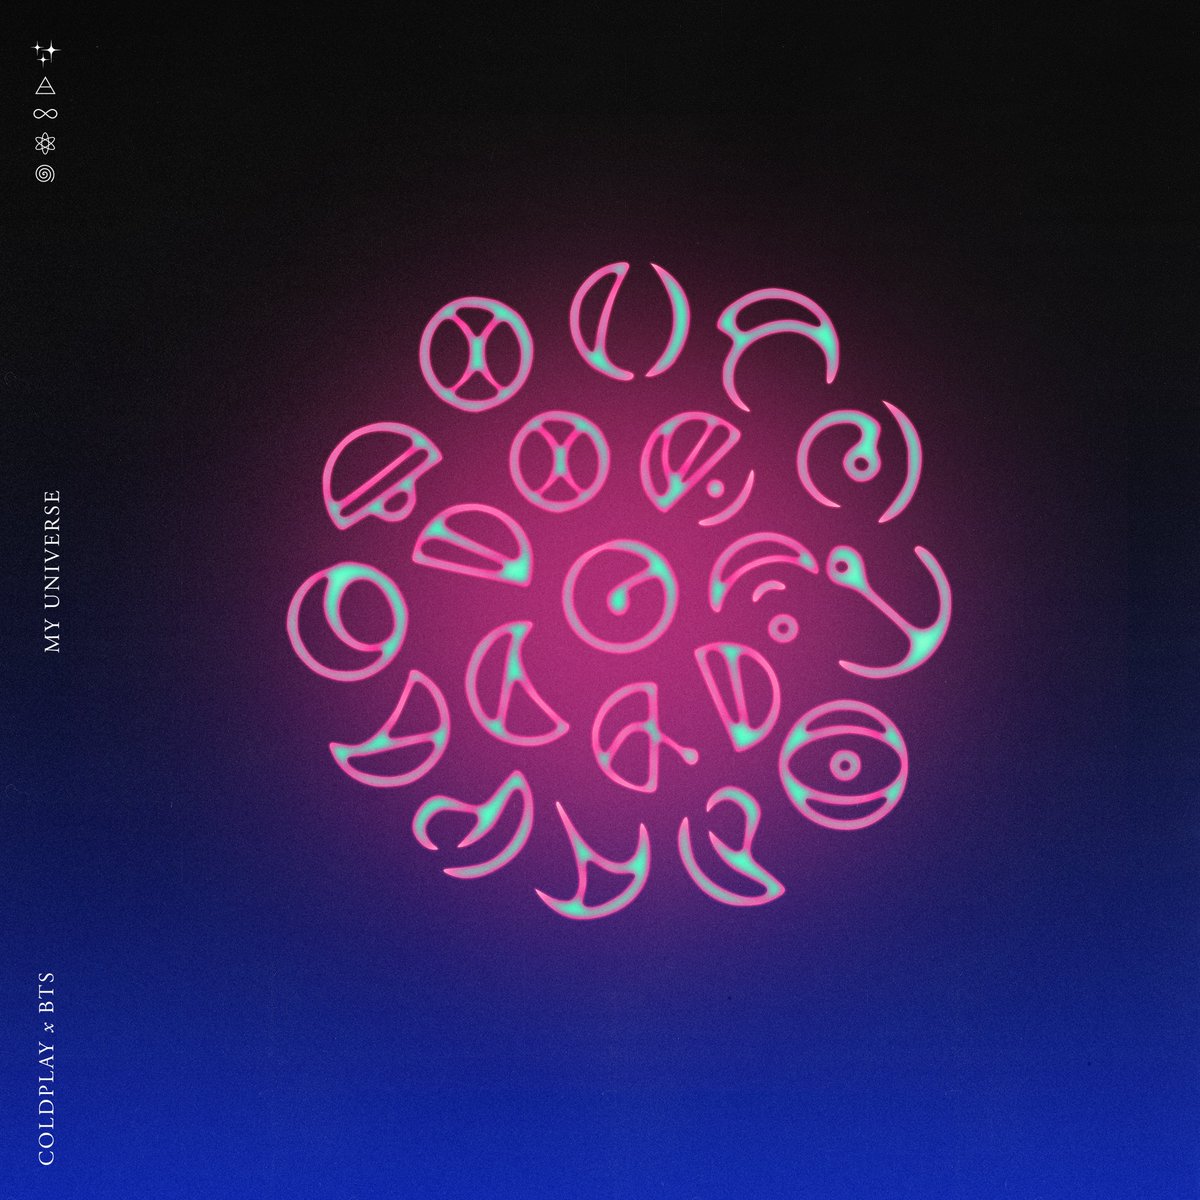 『Coldplay - Biutyful』収録の『Music of the Spheres』ジャケット